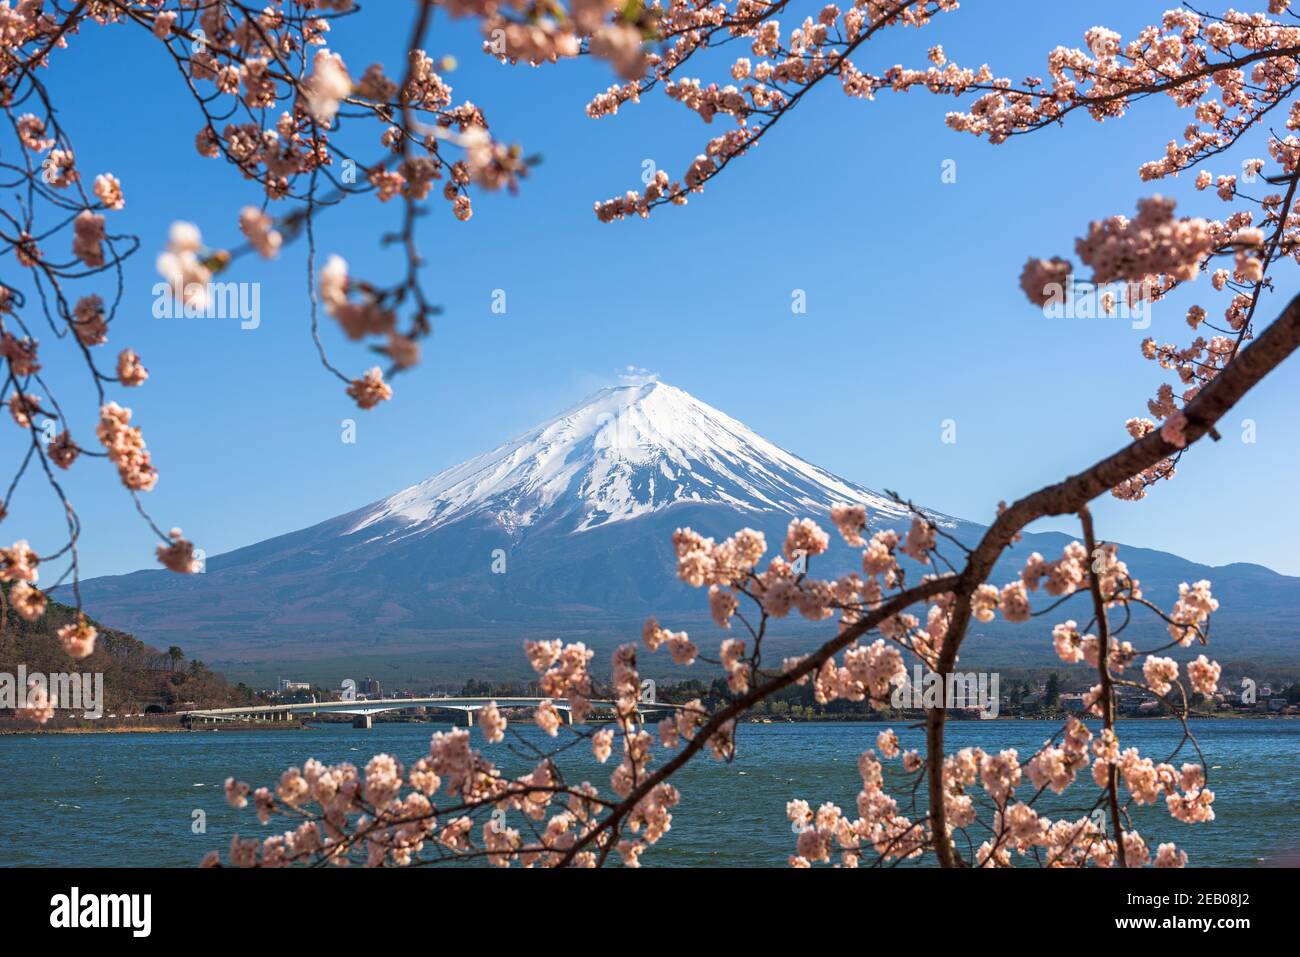 Mt. Fuji, Japan am Kawaguchi See während der Frühjahrssaison mit Kirschblüten. Stockfoto